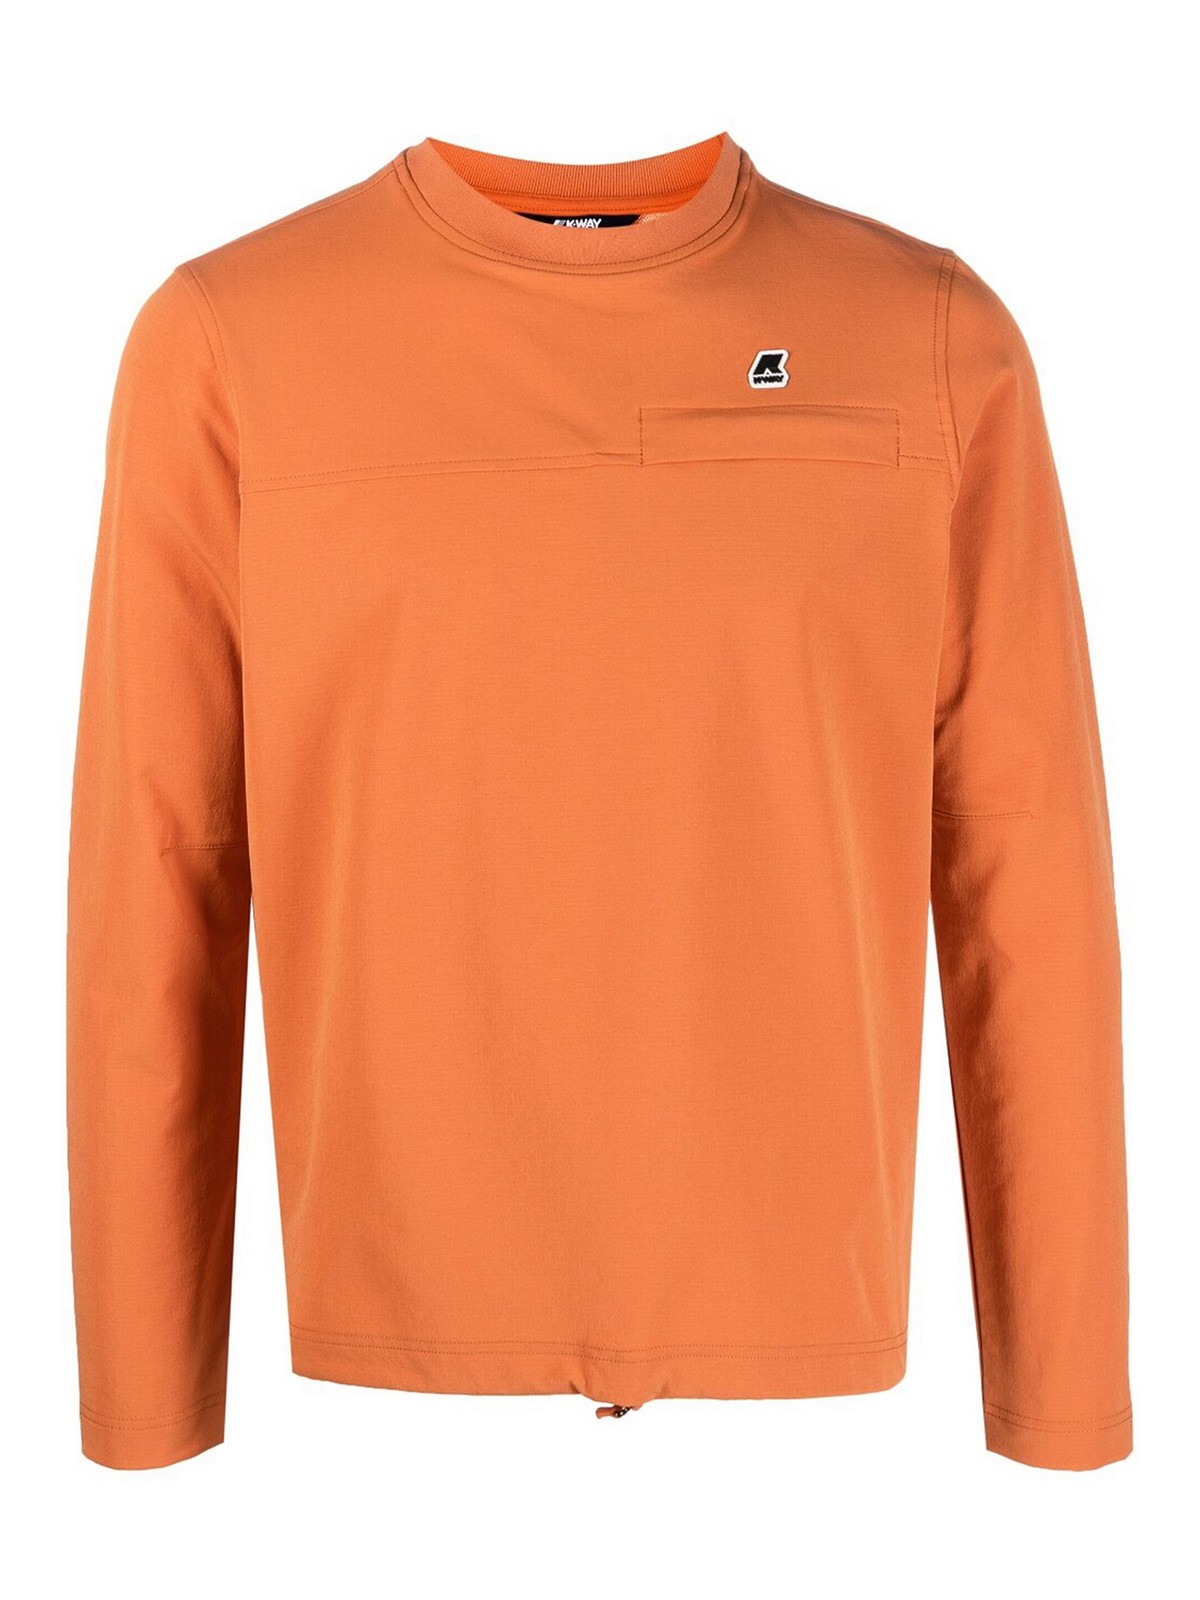 K-way Logo Crewneck Sweatshirt In Orange